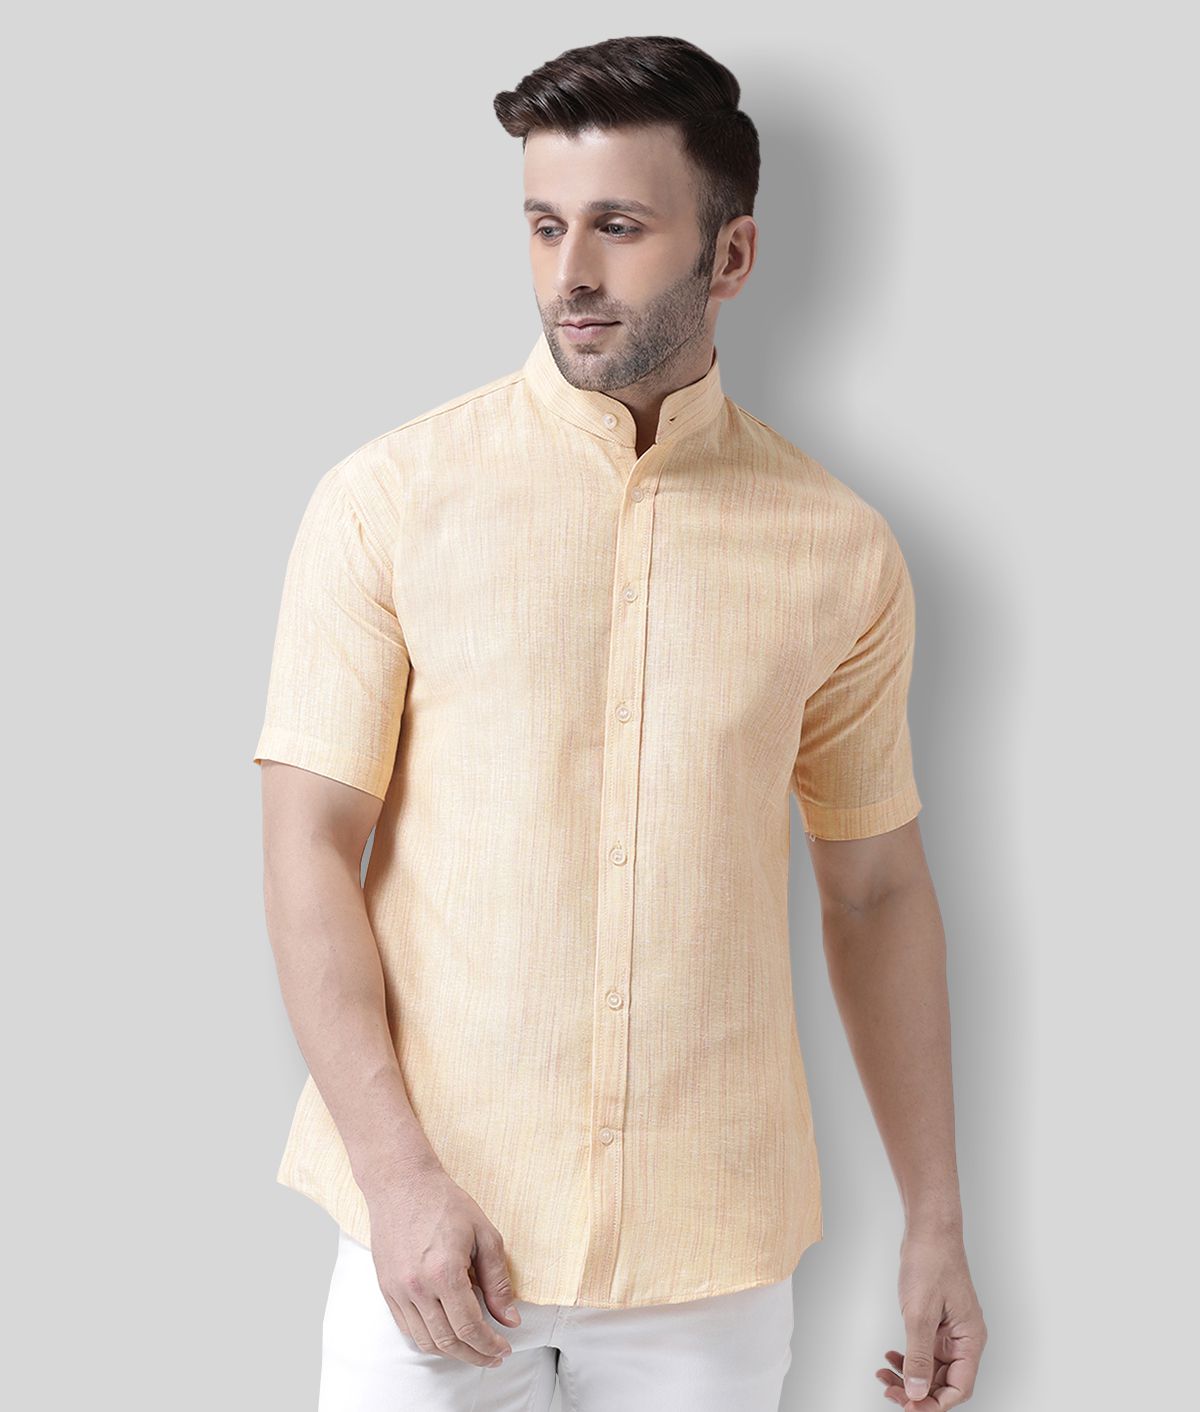     			RIAG - Beige Cotton Regular Fit Men's Casual Shirt (Pack of 1 )